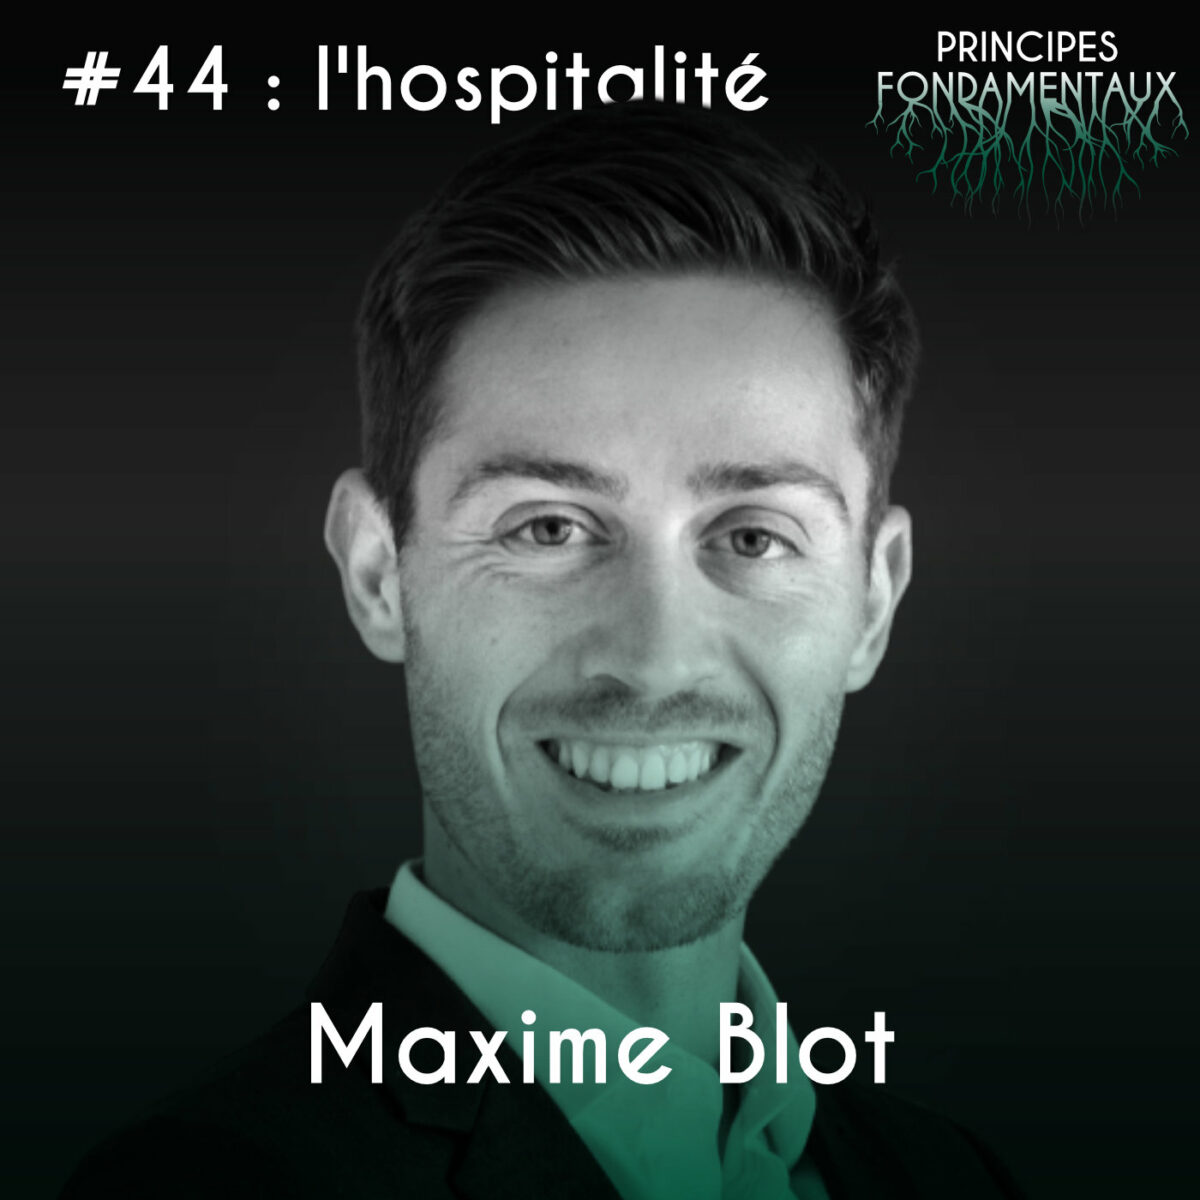 Podcast #44 : Maxime Blot - l'hospitalité